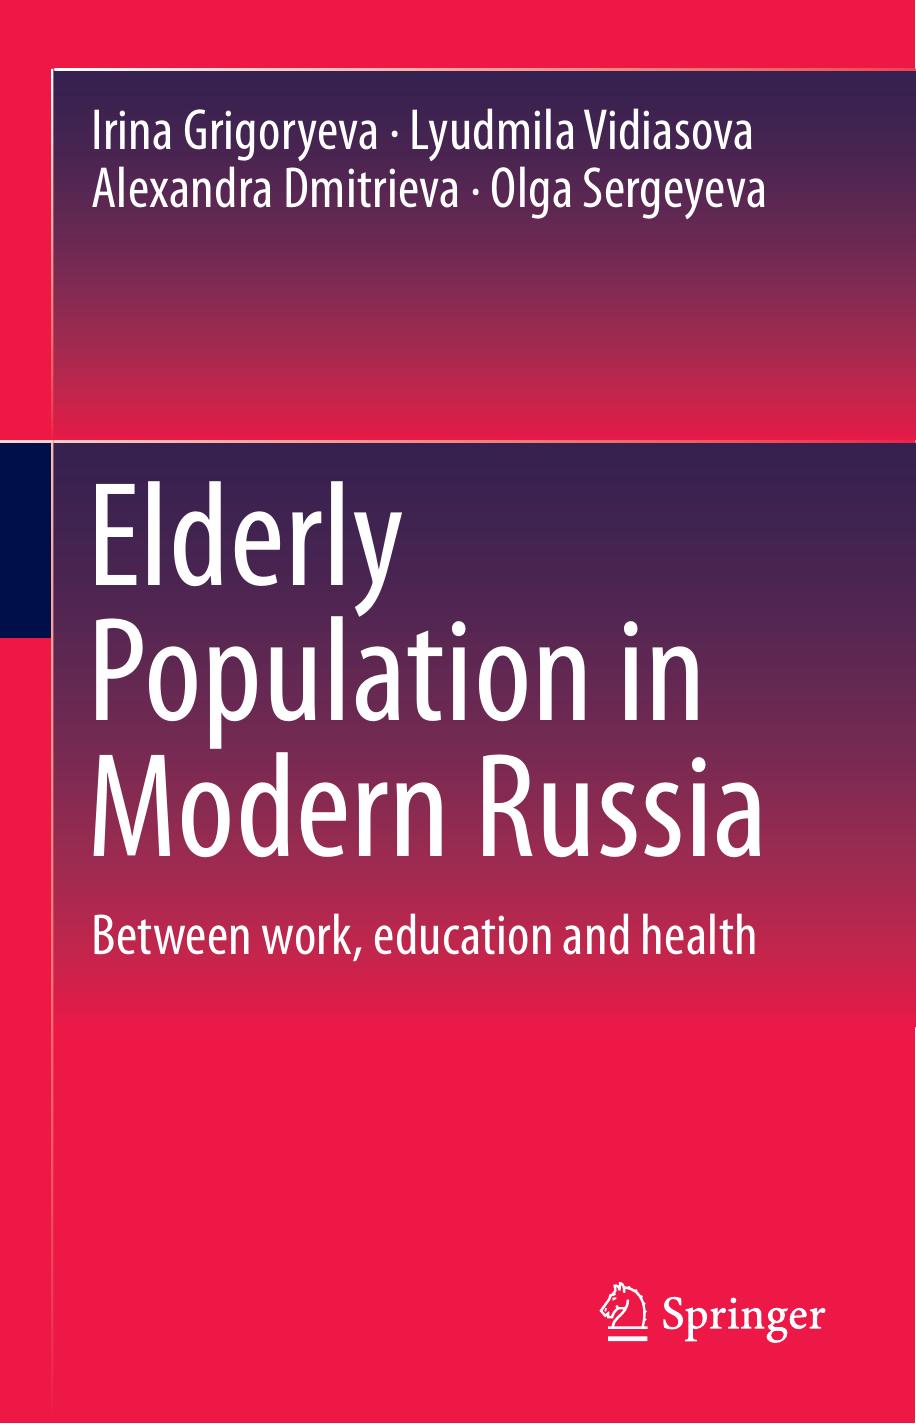 Elderly Population in Modern Russia Between work, education and health 2019